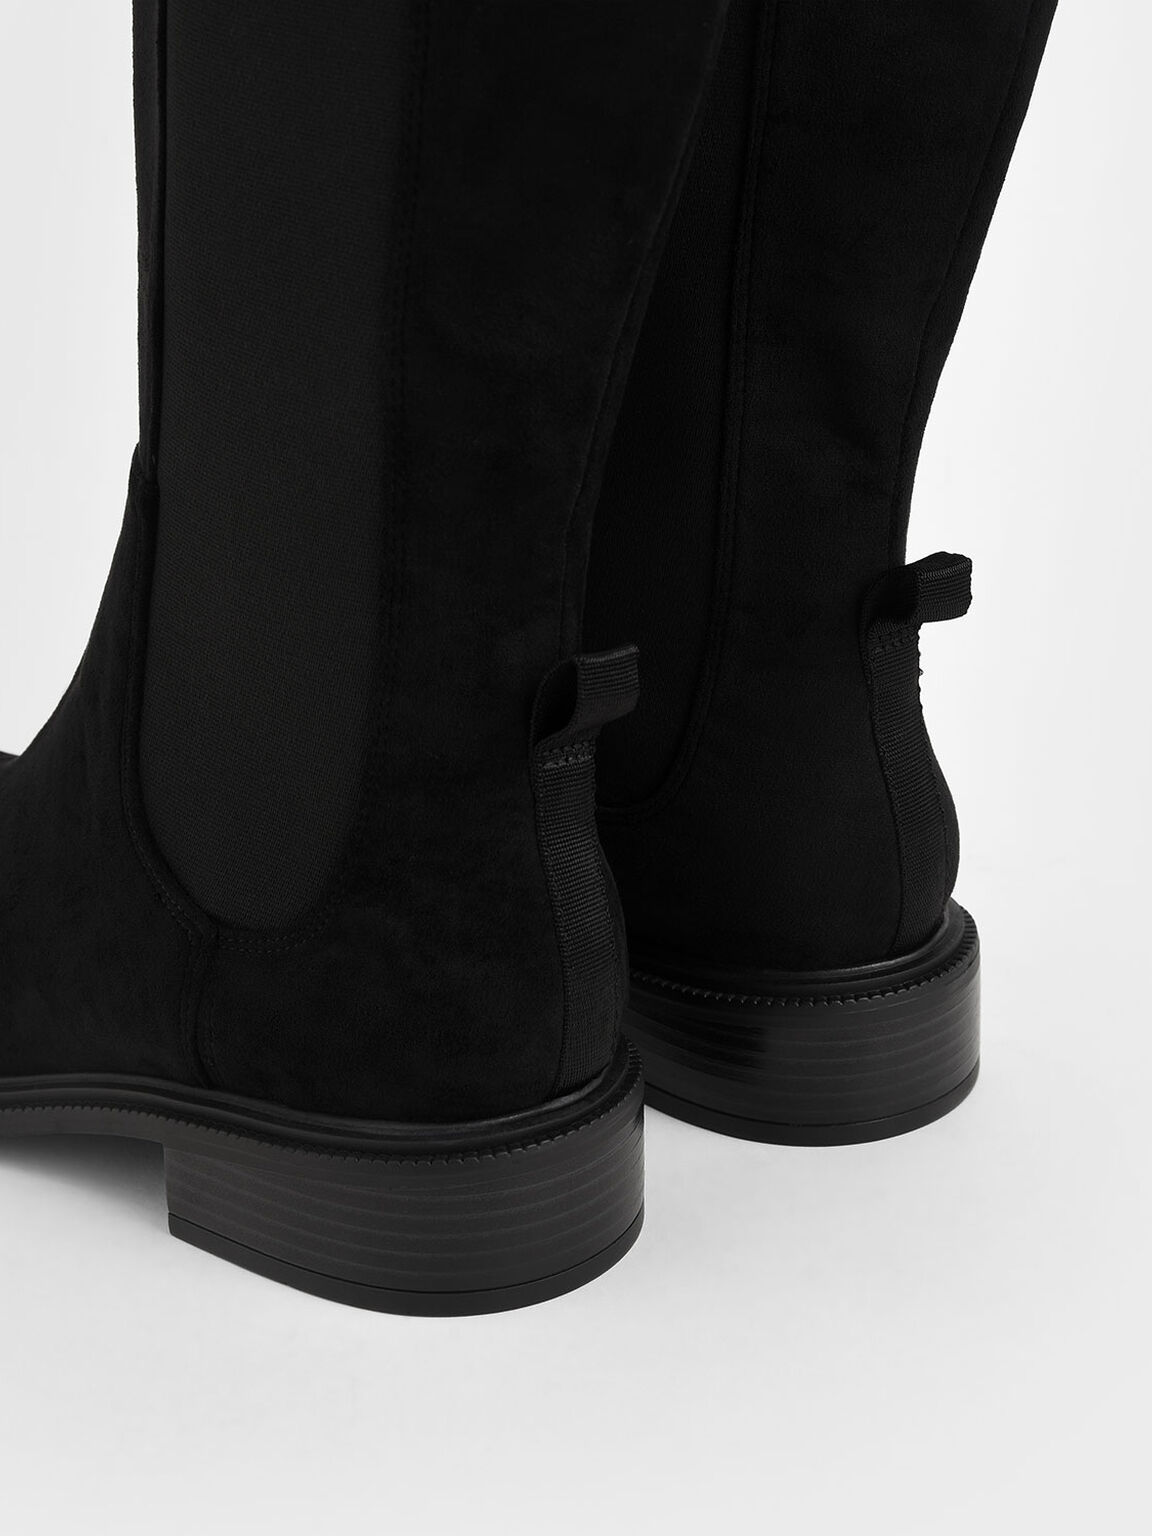 Knee High Chelsea Boots, Black Textured, hi-res